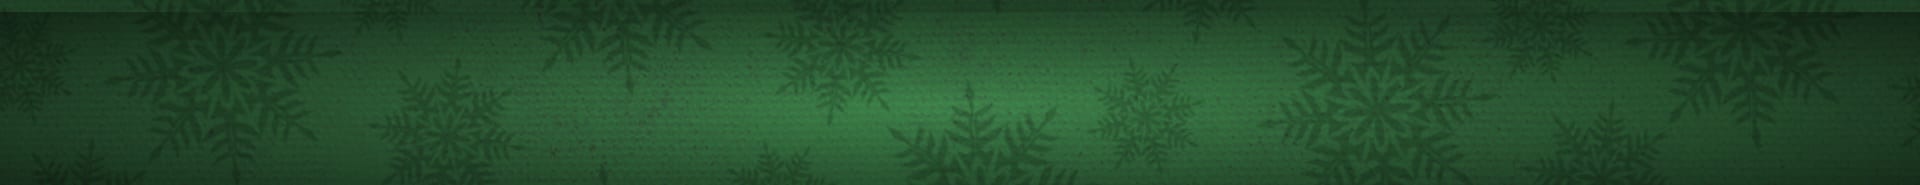 Green Snowflake Background